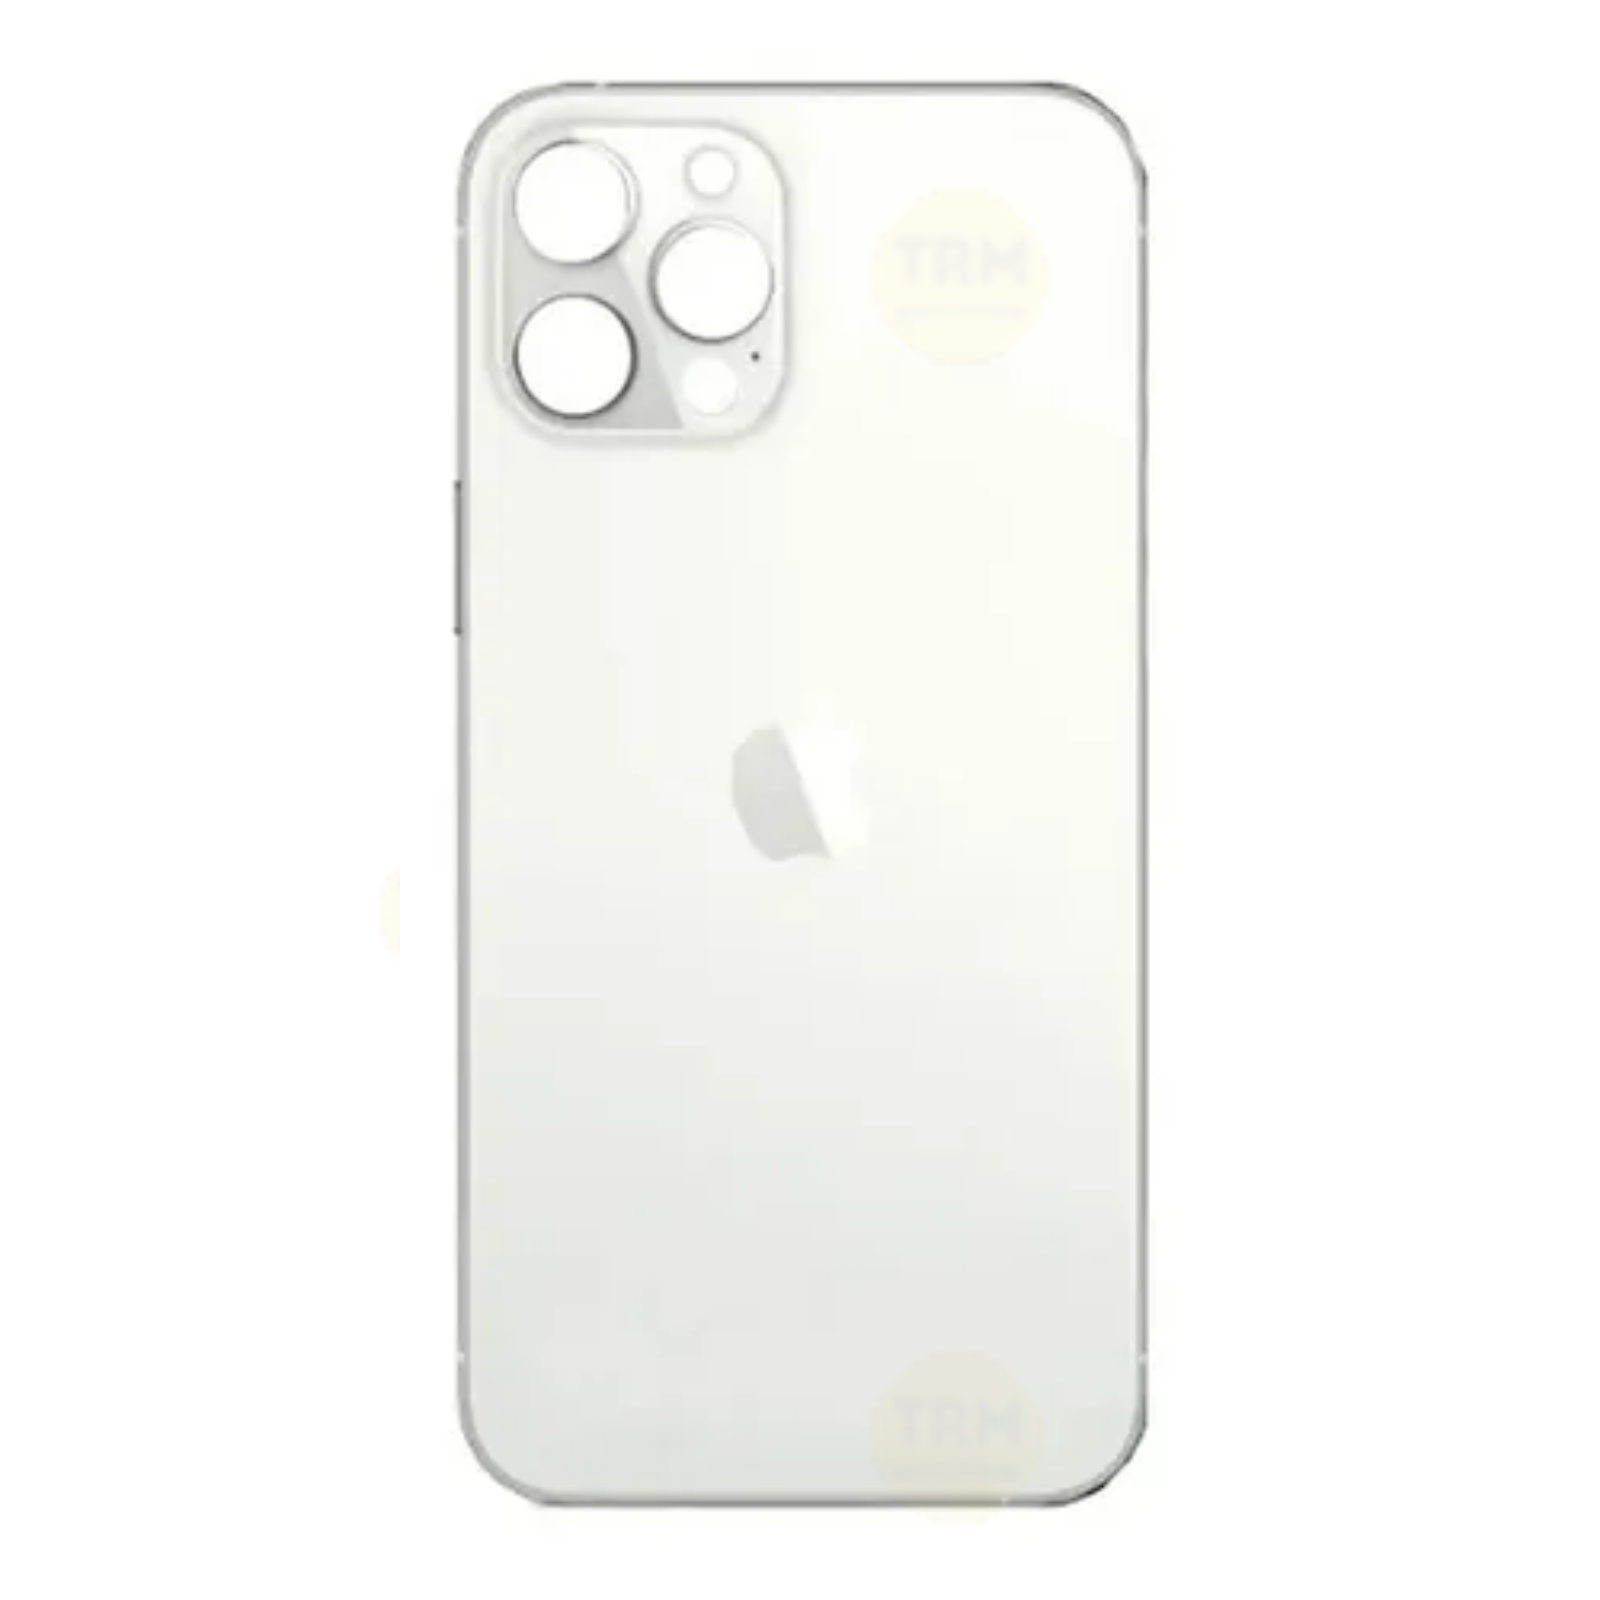 Carcasa iPhone 11 Pro Max color oro – FLUXX REFACCIONES PARA CELULAR